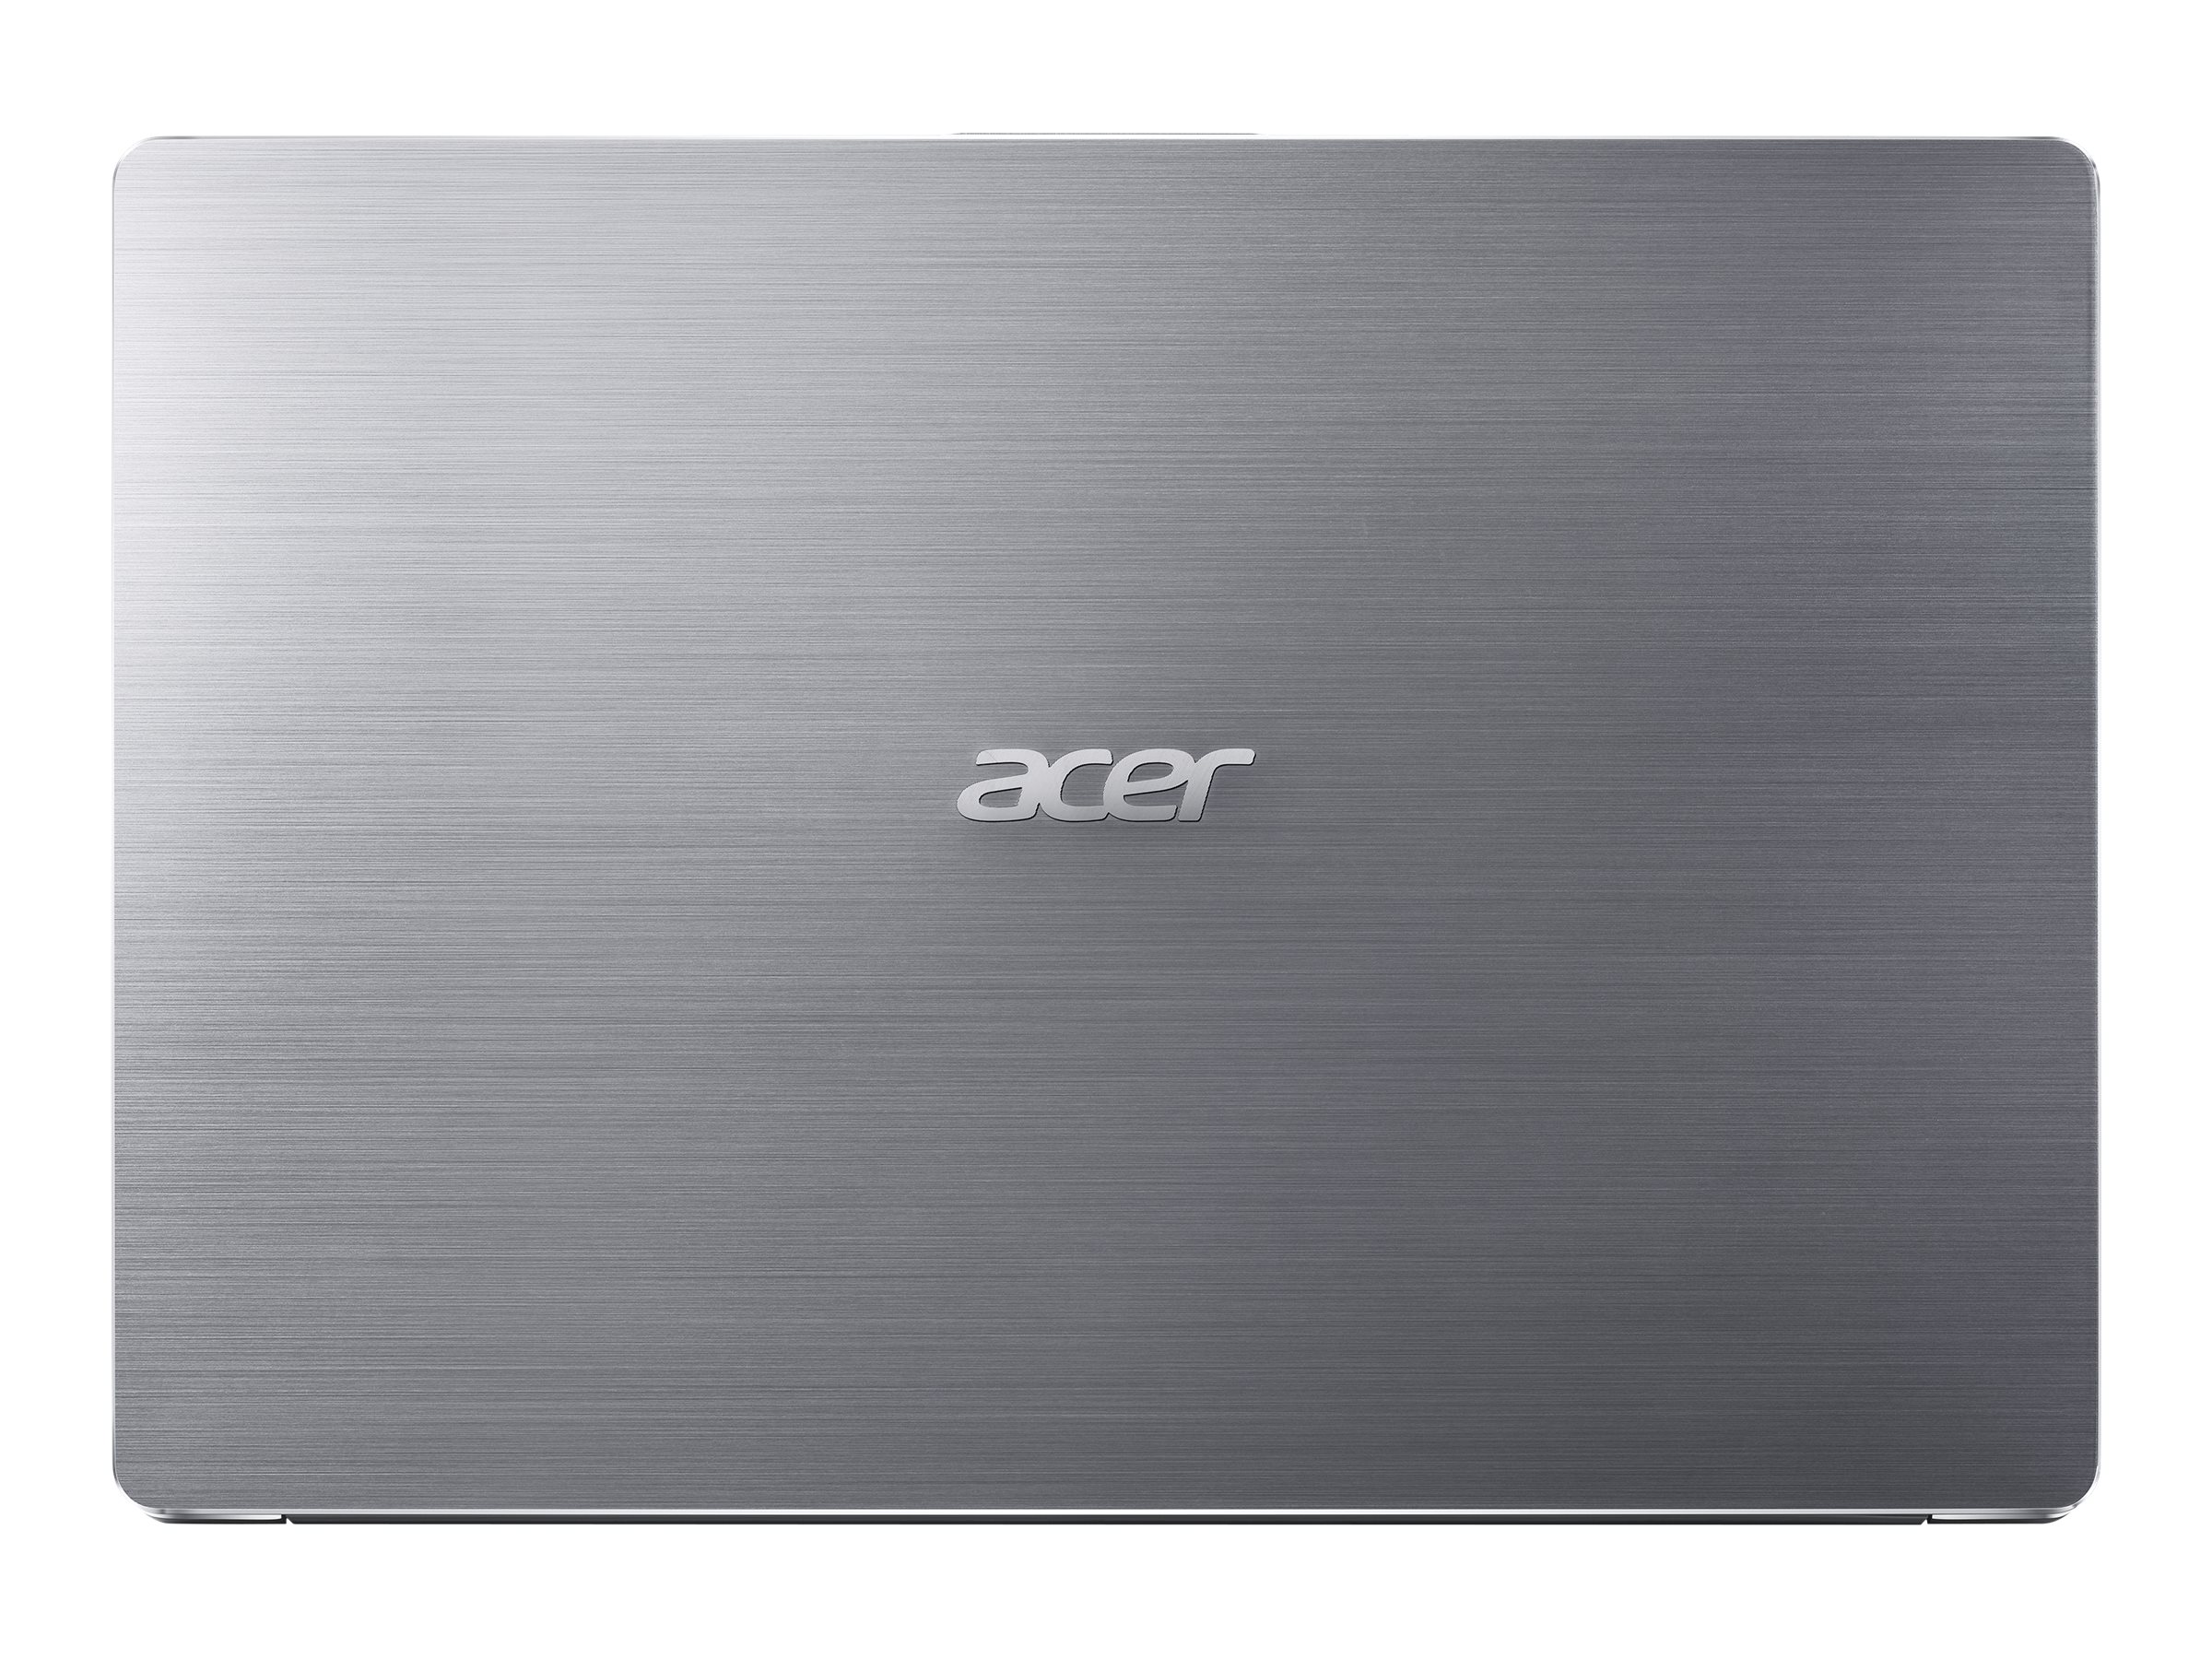 Acer Swift 3 SF314-55-55UT - Intel Core i5 8265U / 1.6 GHz - Win 10 Home 64-bit - UHD Graphics 620 - 8 GB RAM - 256 GB SSD - 14" IPS 1920 x 1080 (Full HD) - Wi-Fi 5 - sparkly silver - kbd: US Intl - image 5 of 7